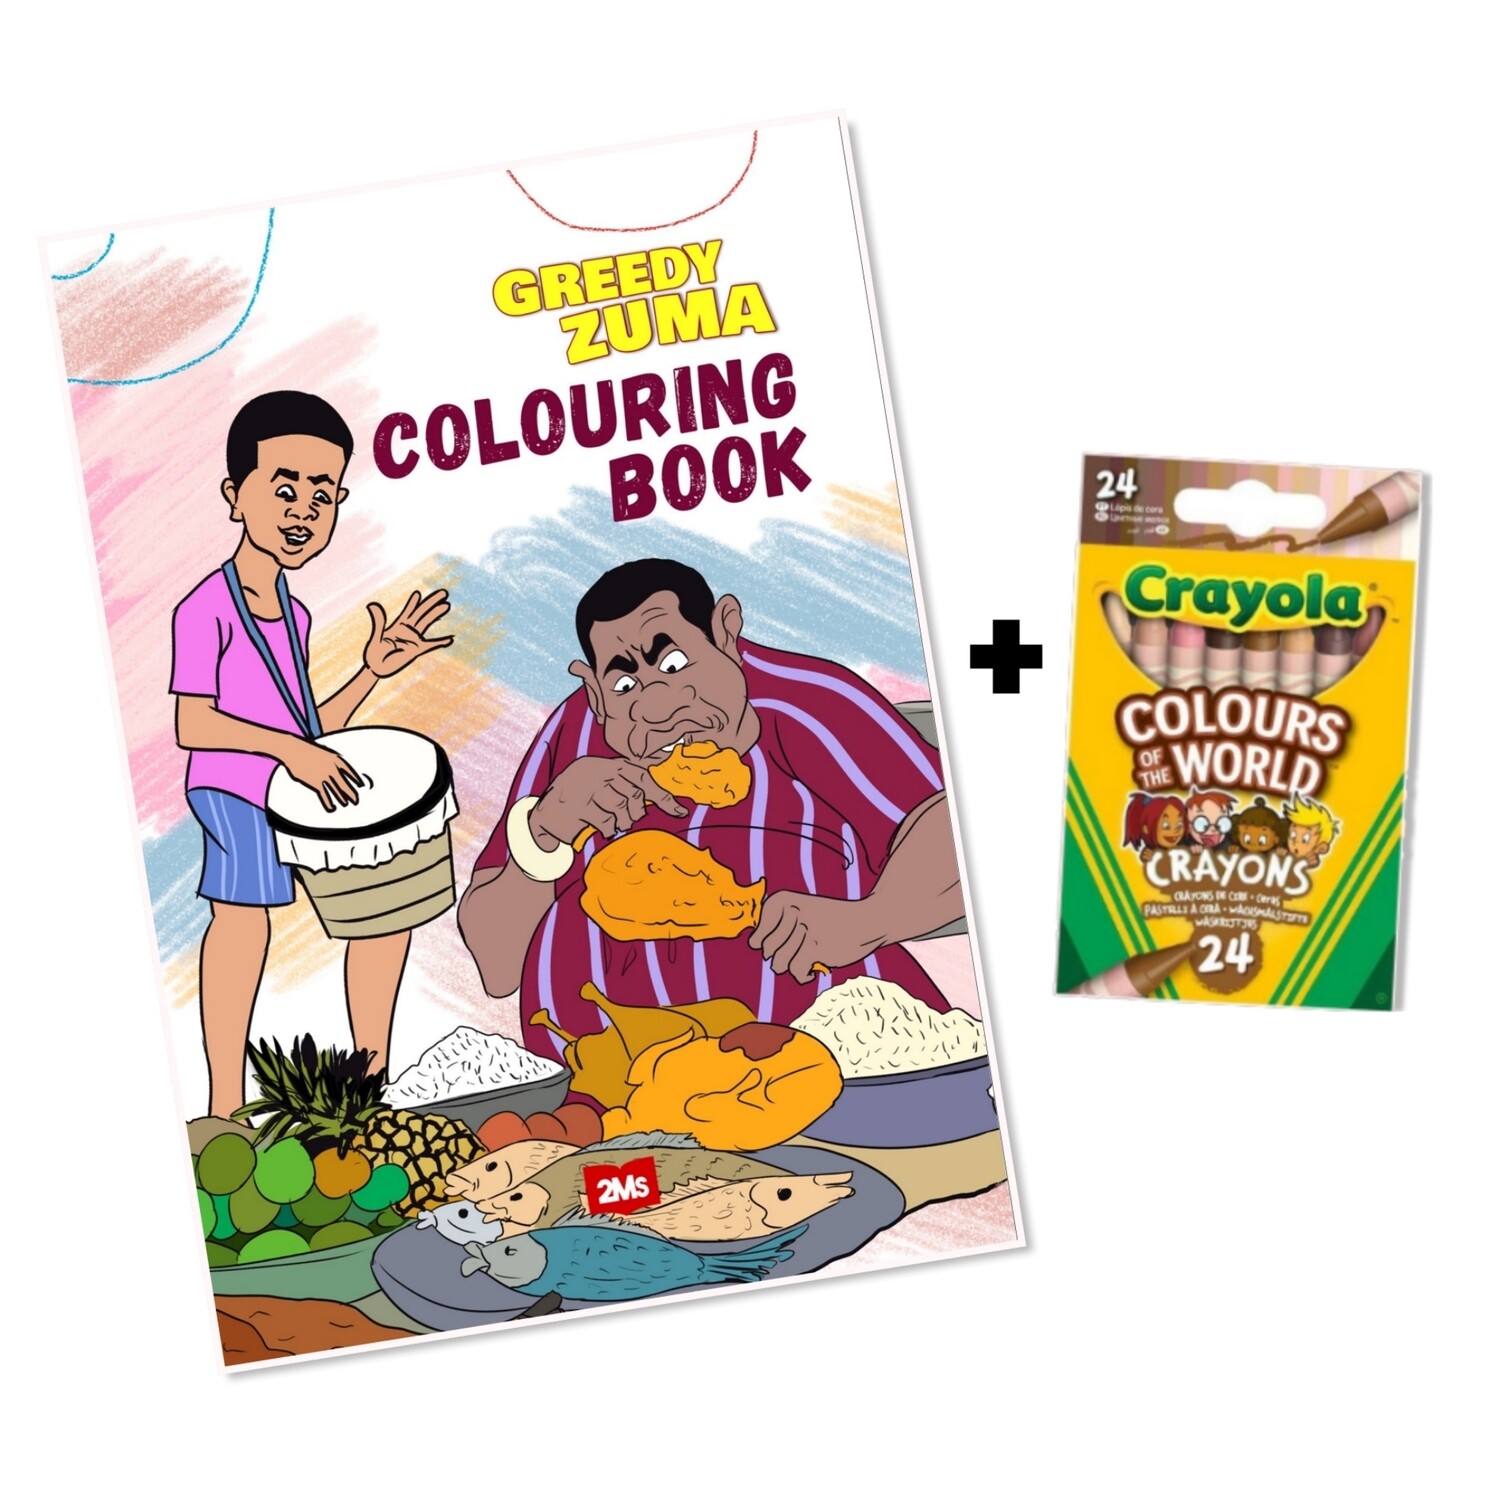 Greedy Zuma Colouring Book + Crayola skin tone crayons